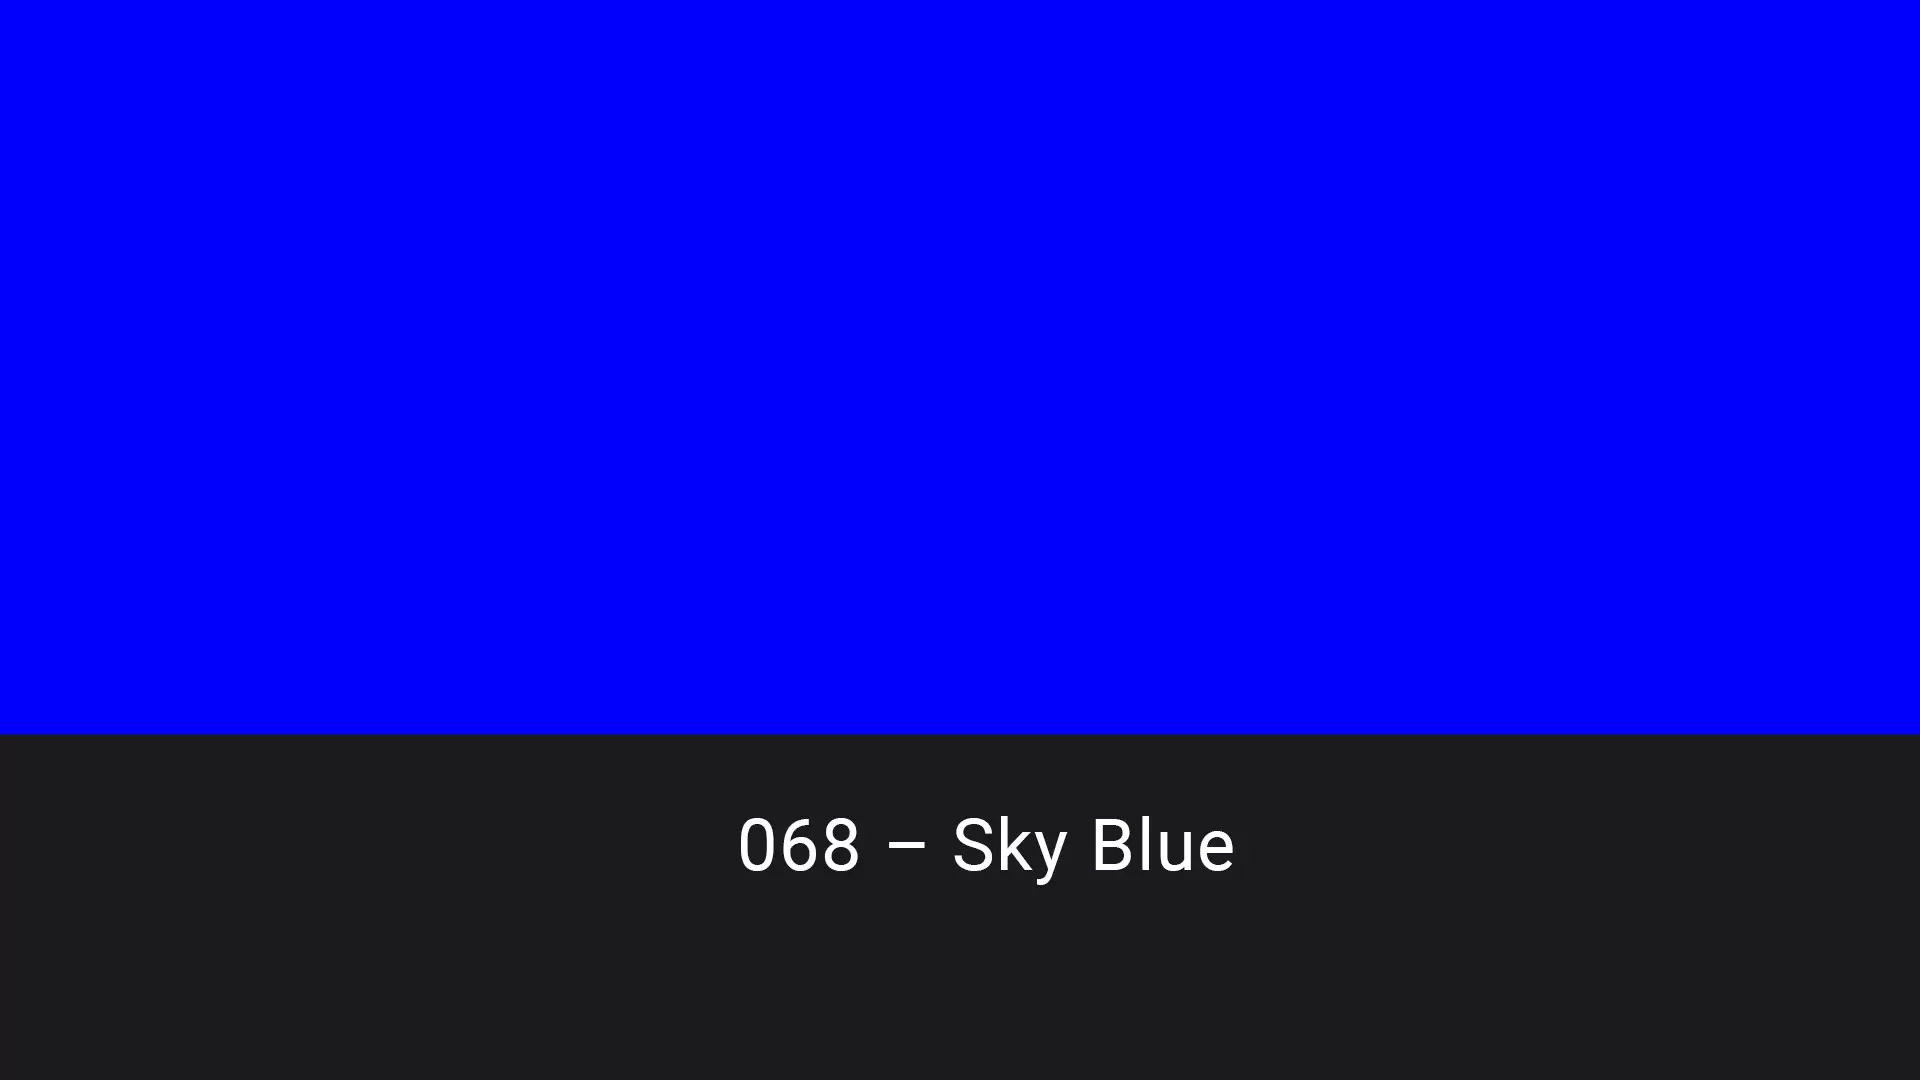 Cotech filters 068 Sky Blue